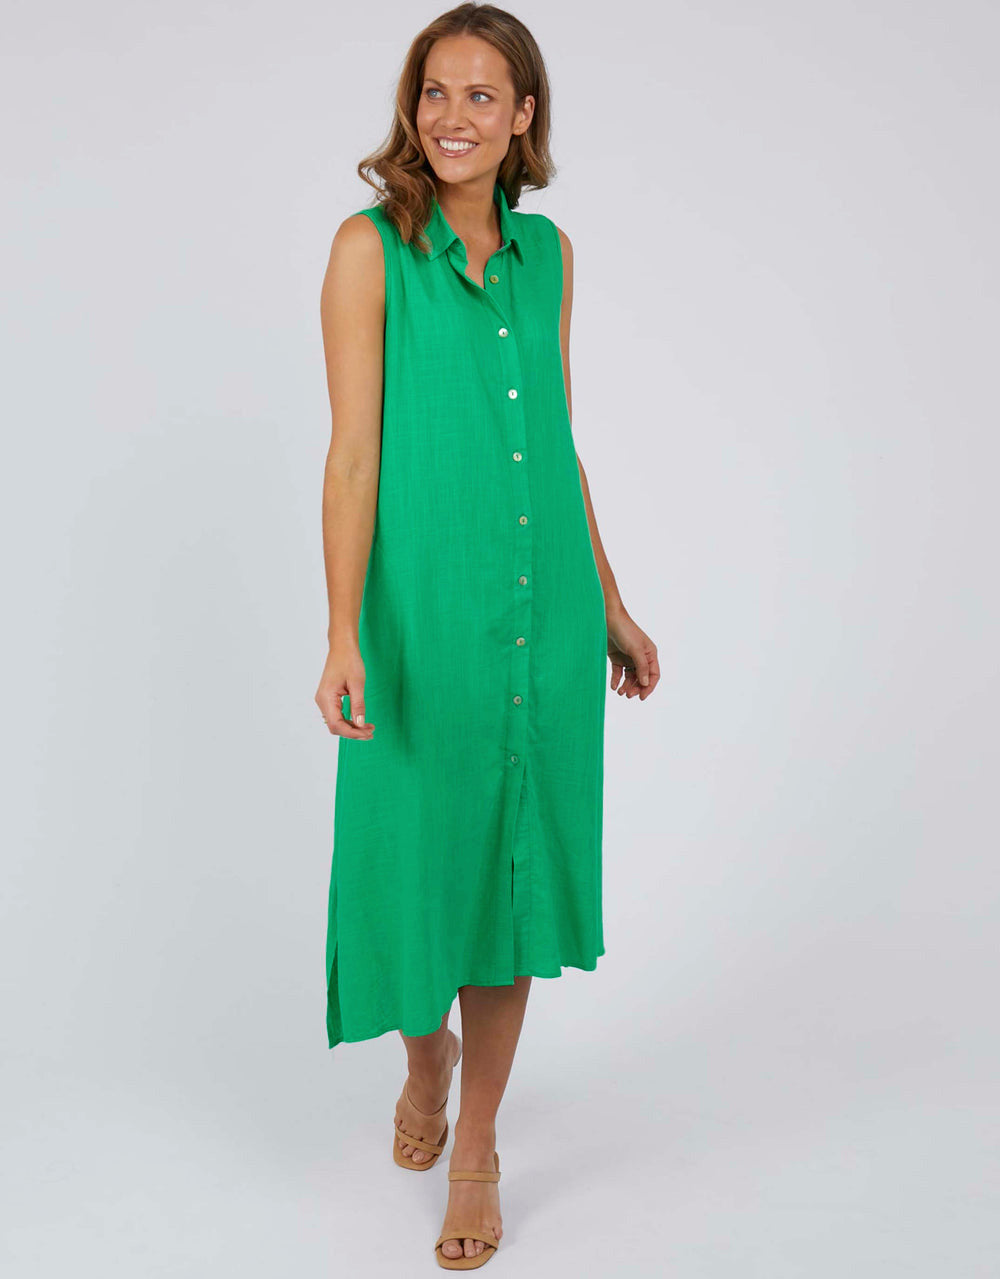 elm-cara-sleeveless-shirt-dress-bright-green-womens-clothing